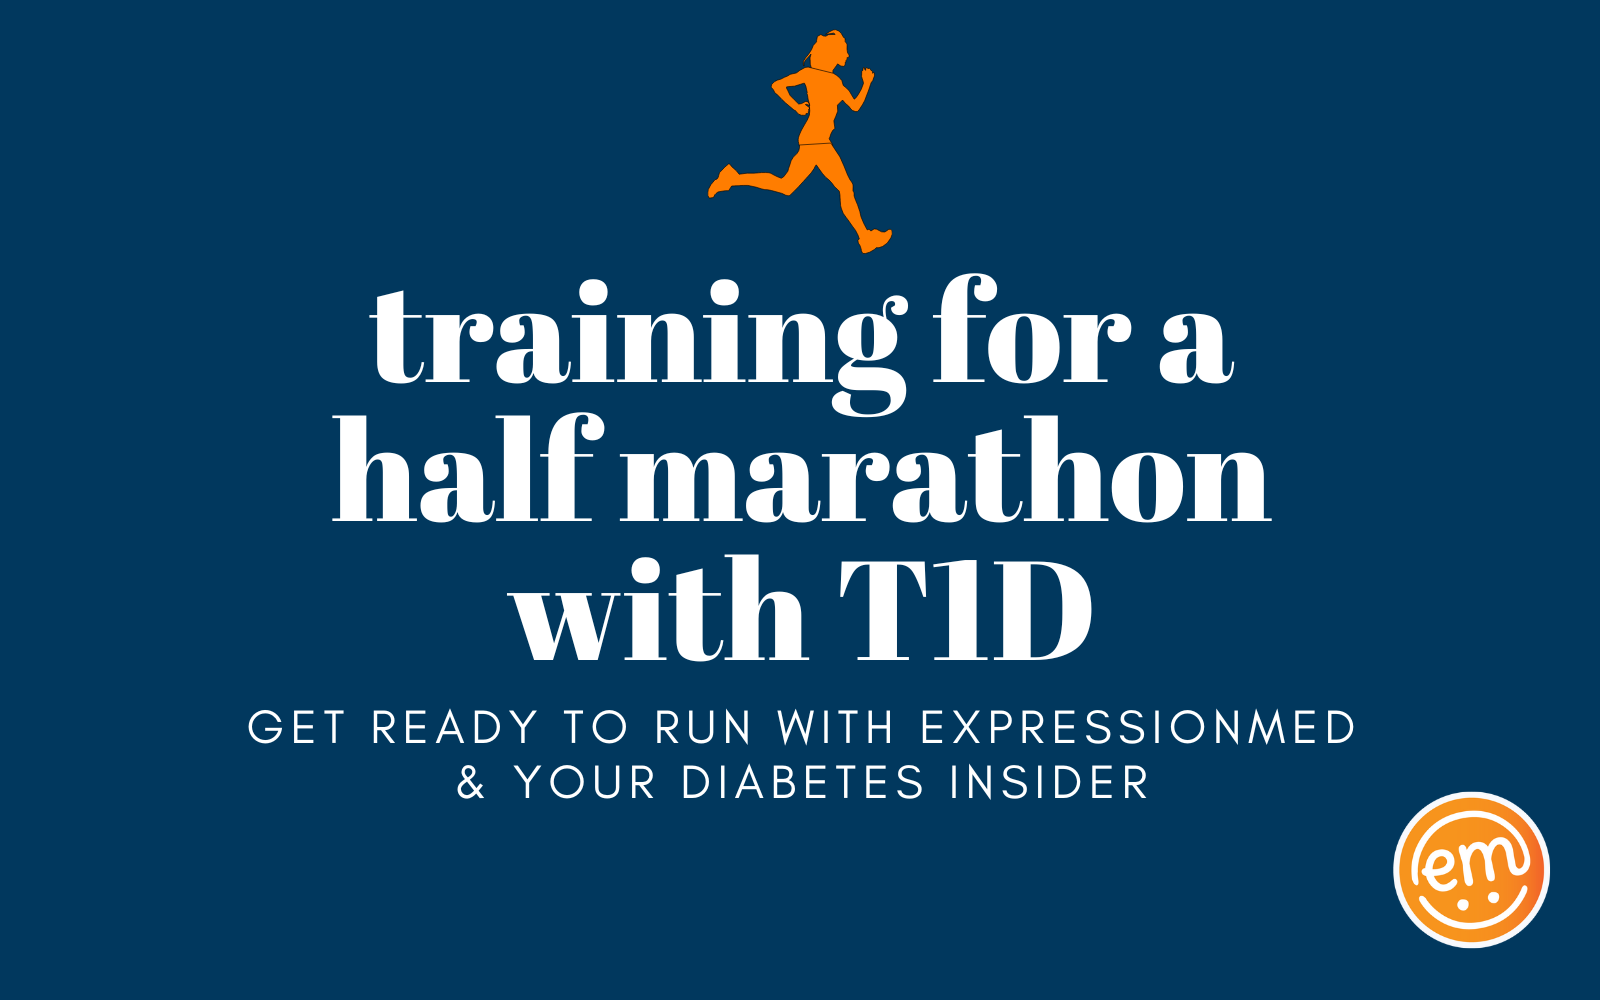 Training for a half marathon with type 1 diabetes